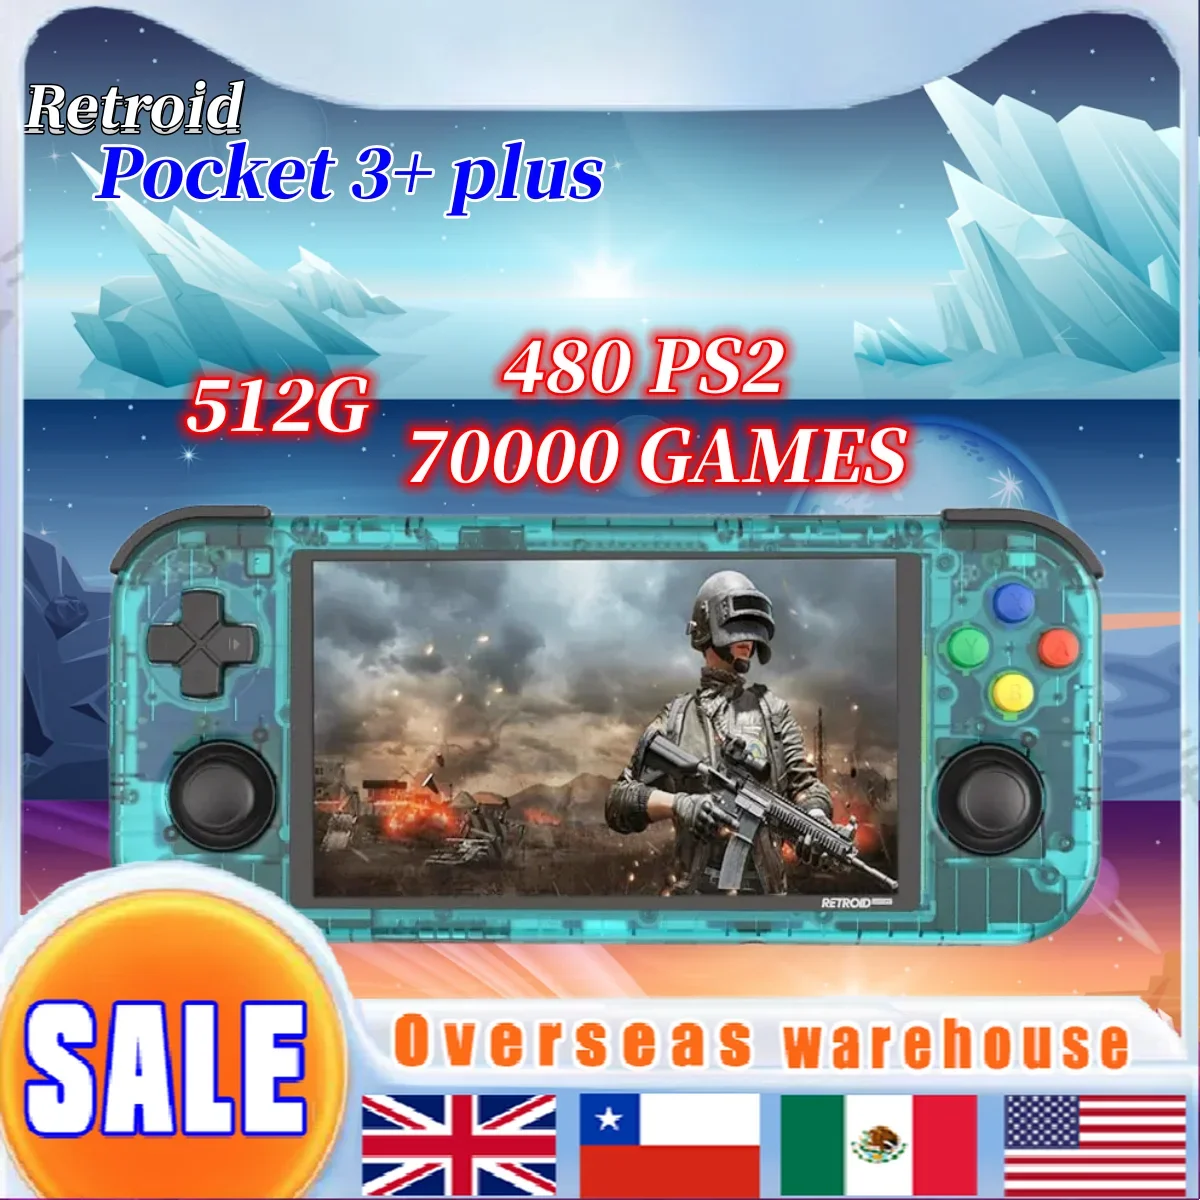 Retroid Pocket 3+ – The Gaming Eagle